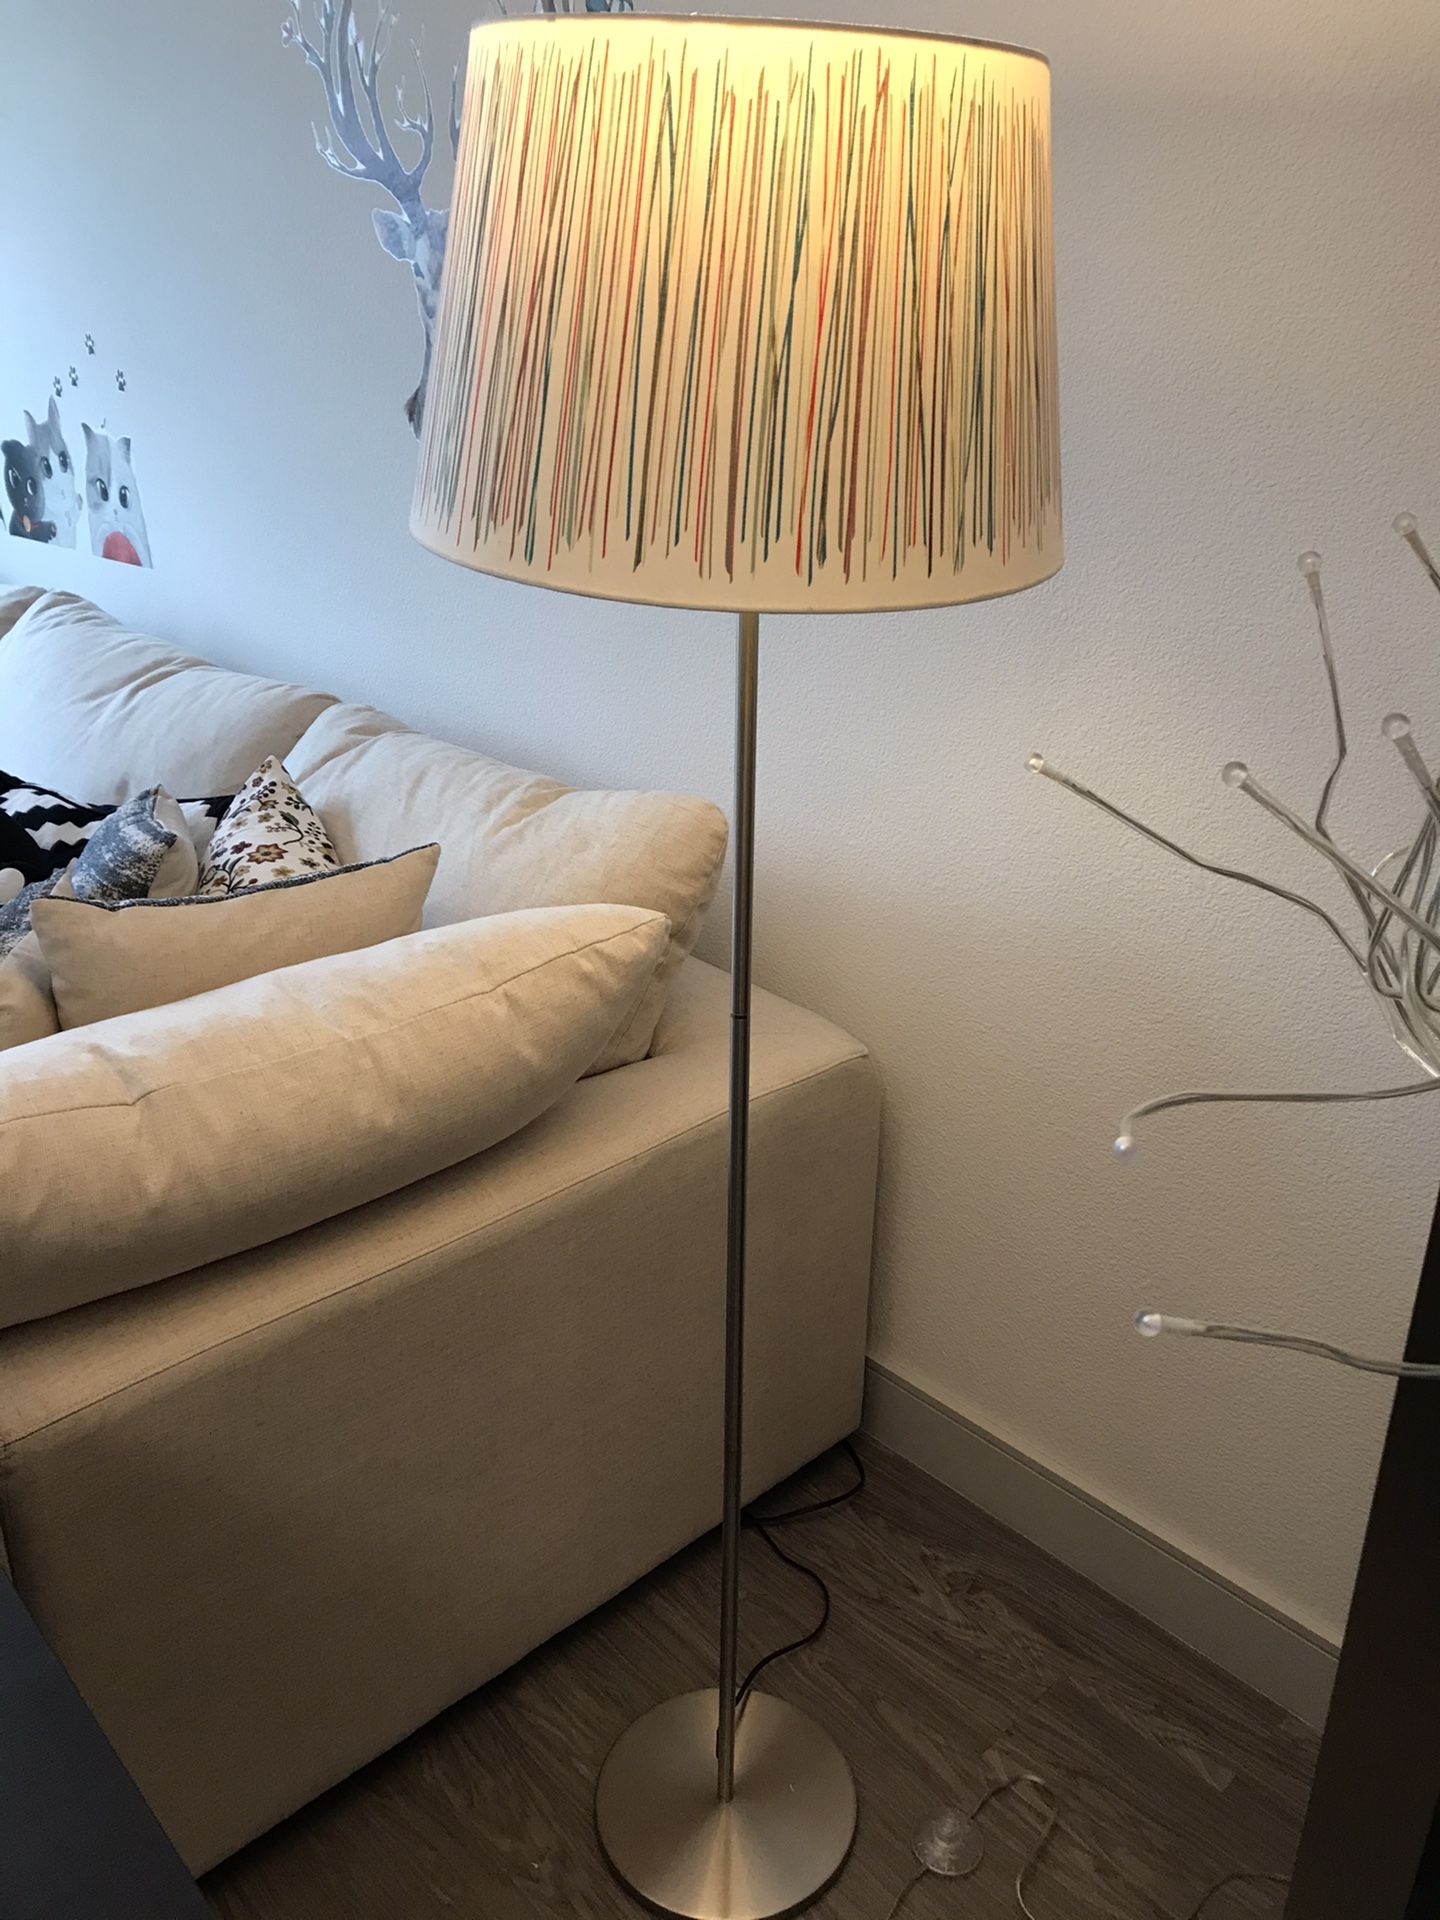 Living room lamp floor lamp with warm lighting